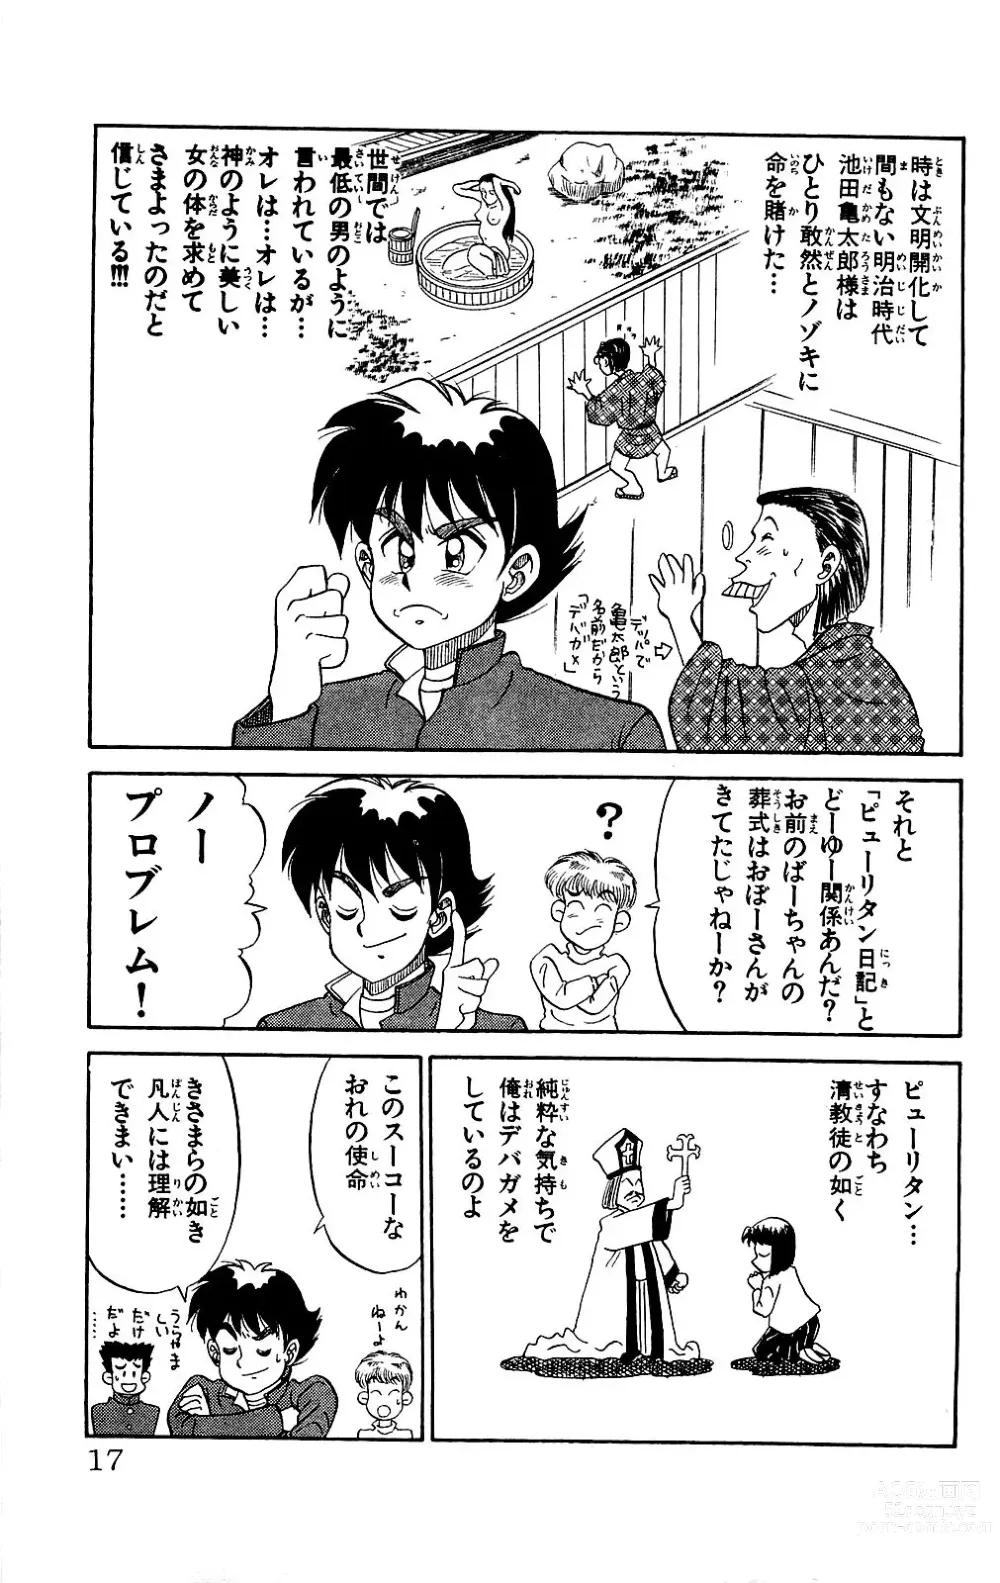 Page 15 of manga Orette Piyoritan Vol. 1